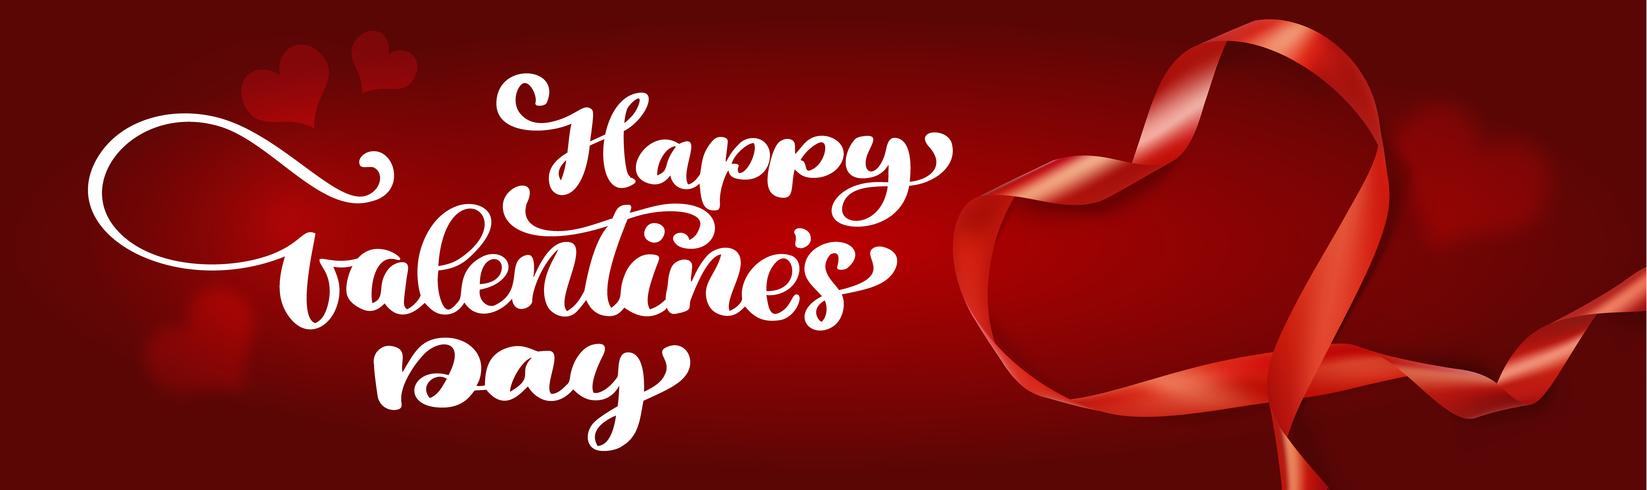 Letras de texto feliz día de San Valentín banners vector